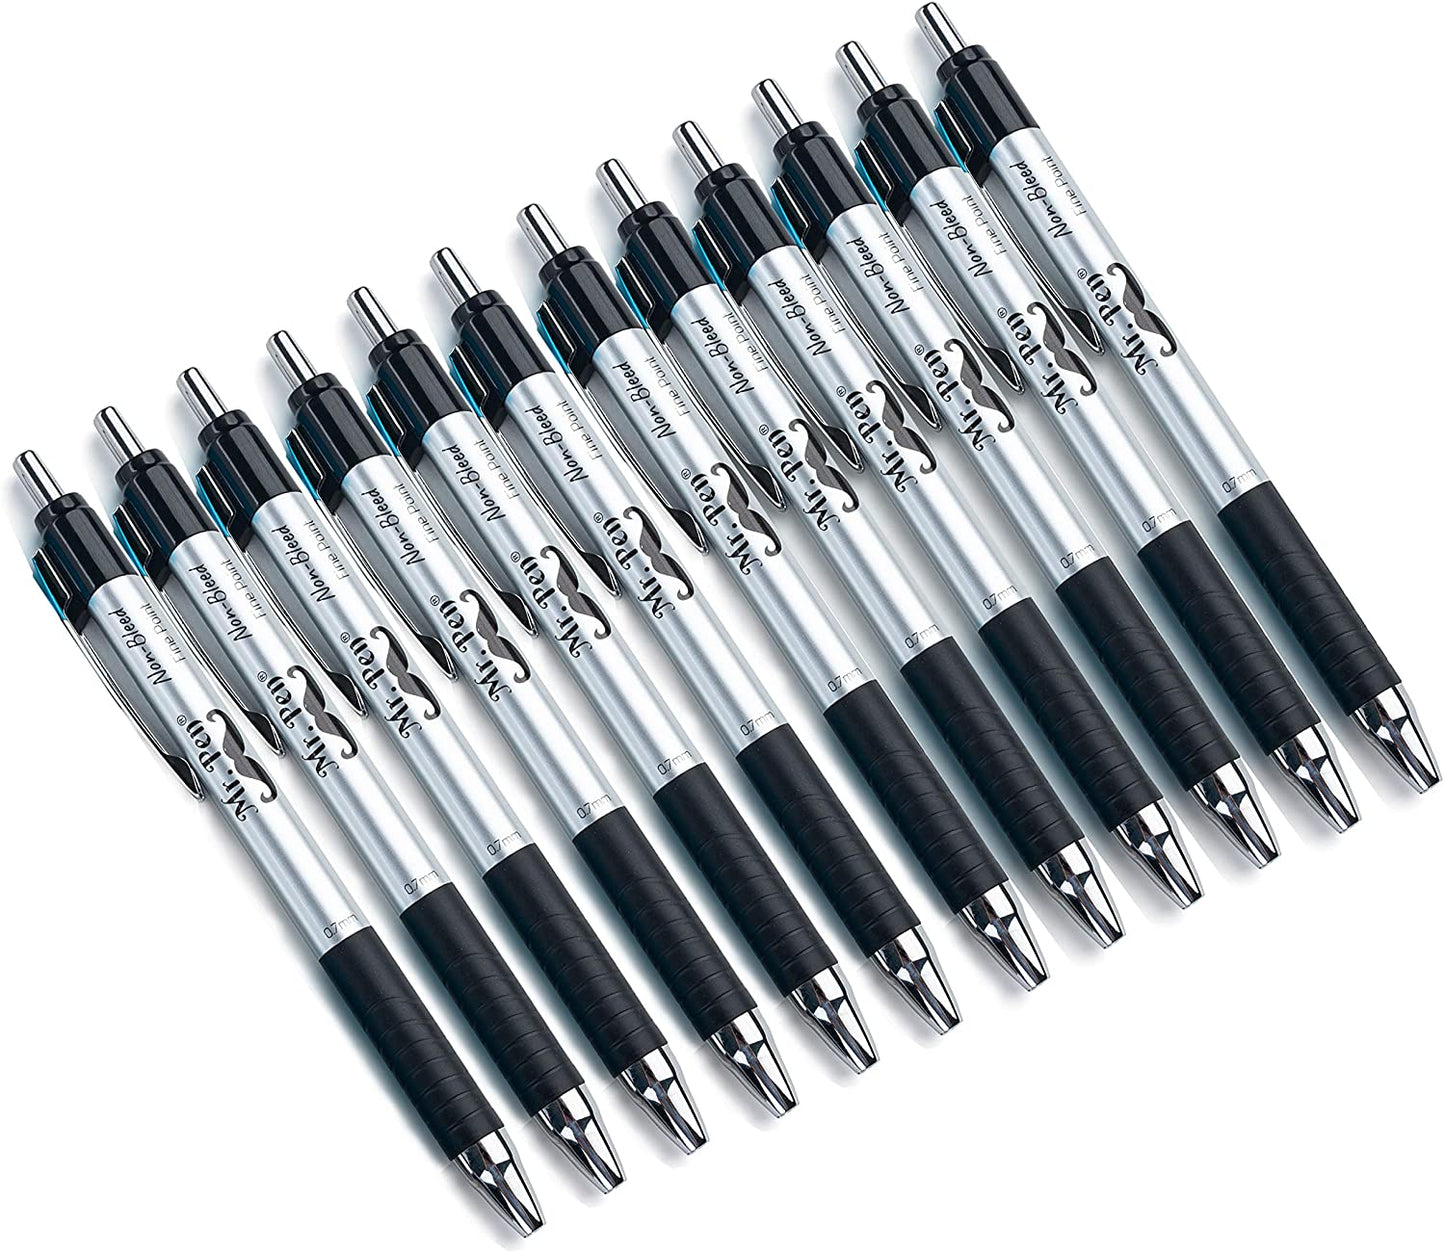 Pens, Black Pens, 12 Pack, Fast Dry, No Smear Pens, Bible Pens, Pens for Journaling, Pens No Bleed Through, Pens Fine Point, Journal Pens, Fine Tip, Planner Pens, Ball Point Journal Pens